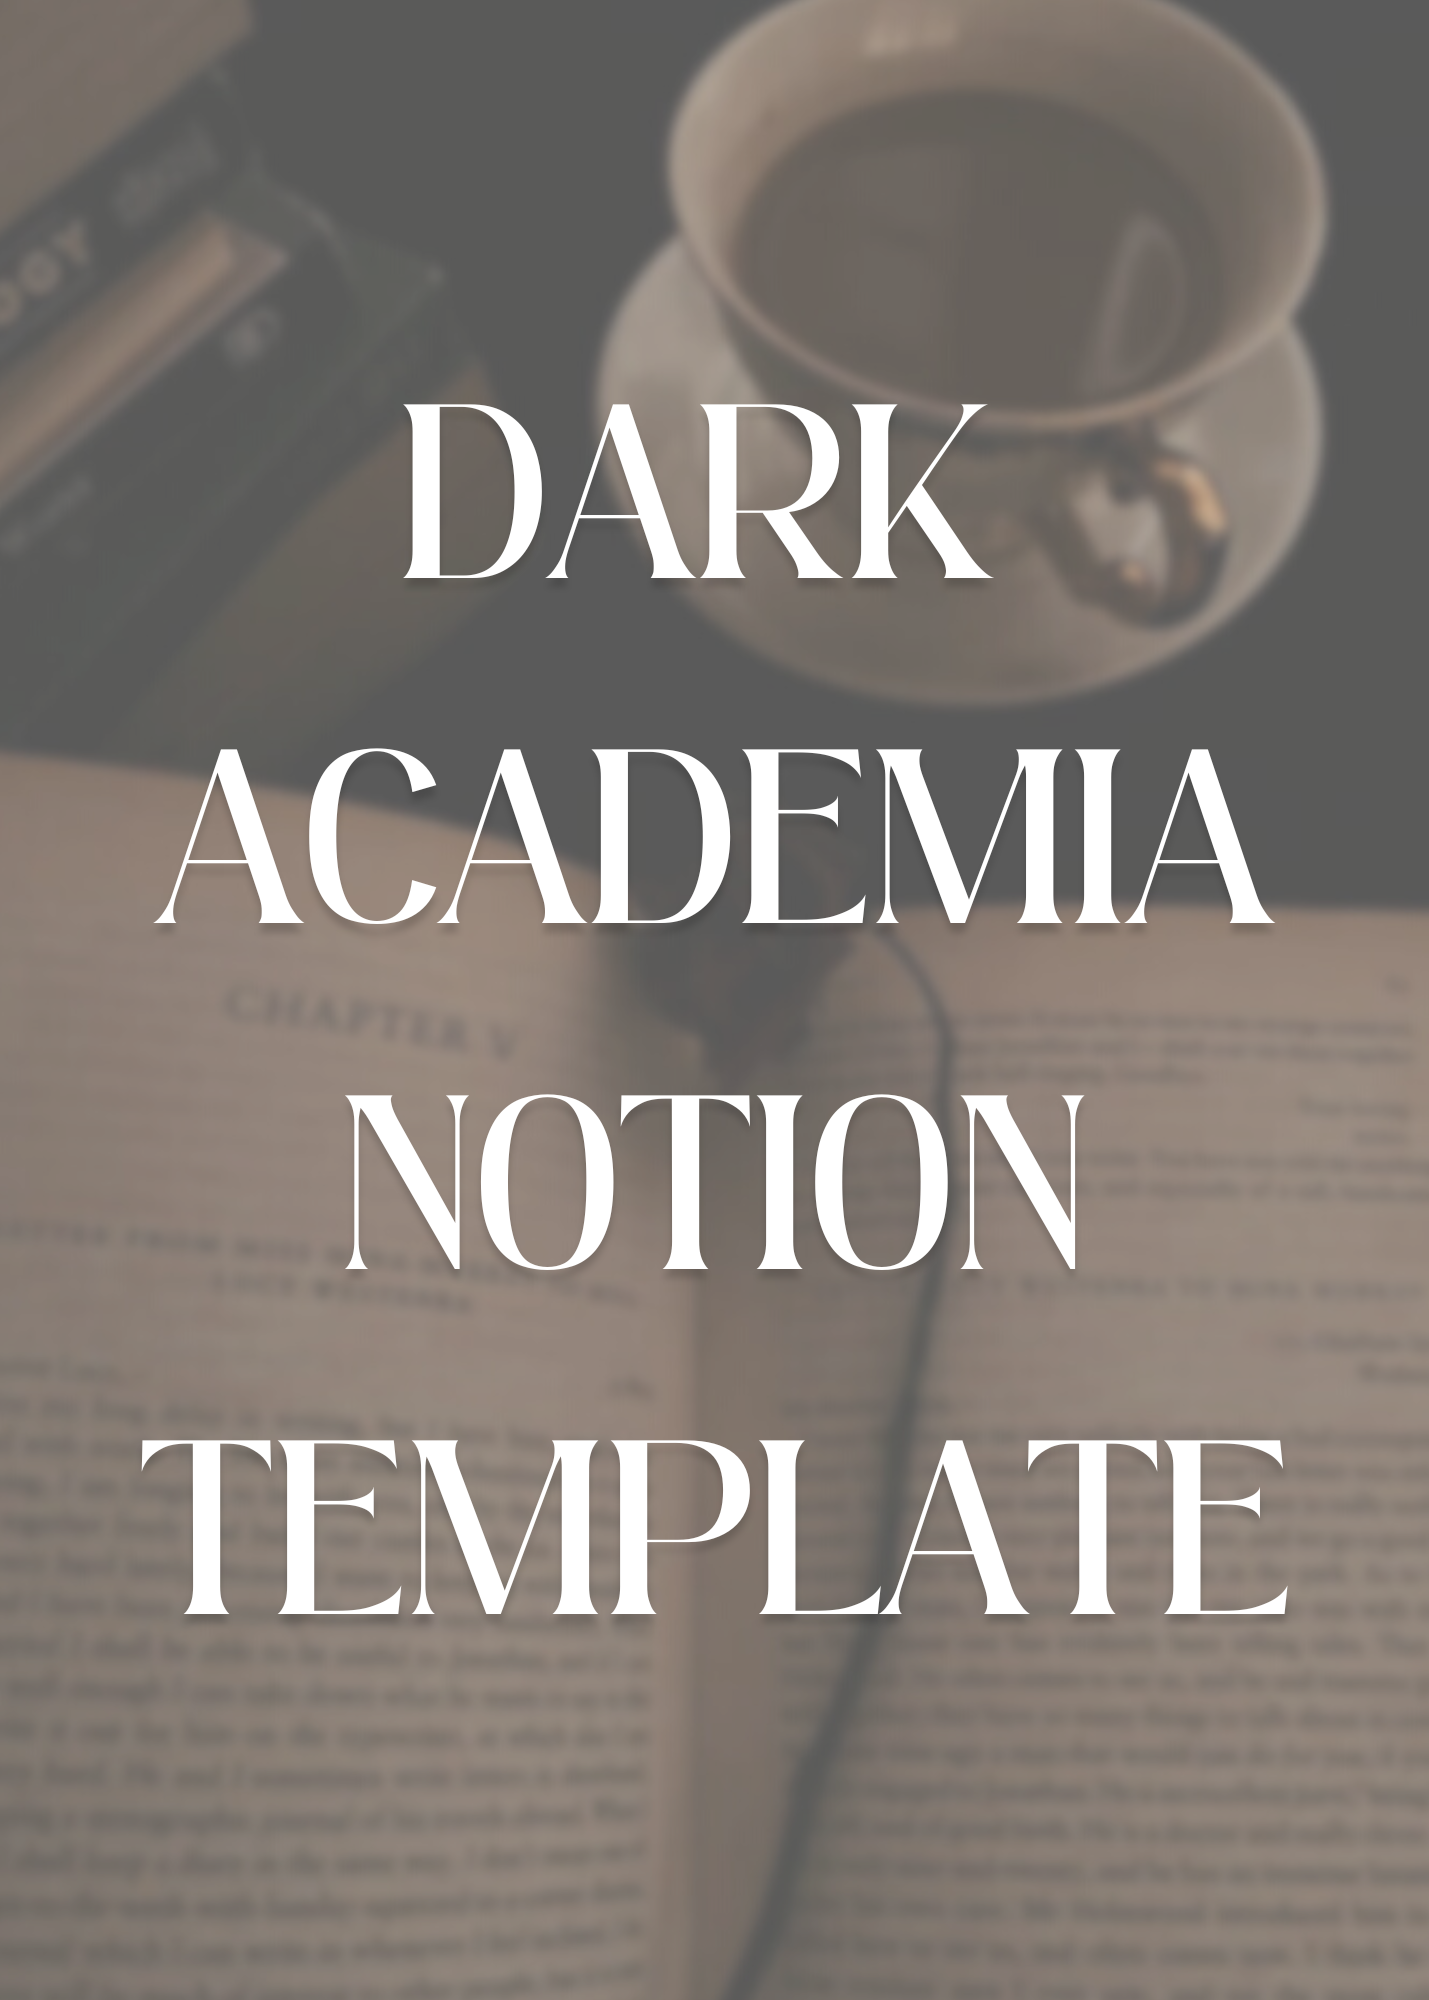 Dark Academia Bookish Notion Template